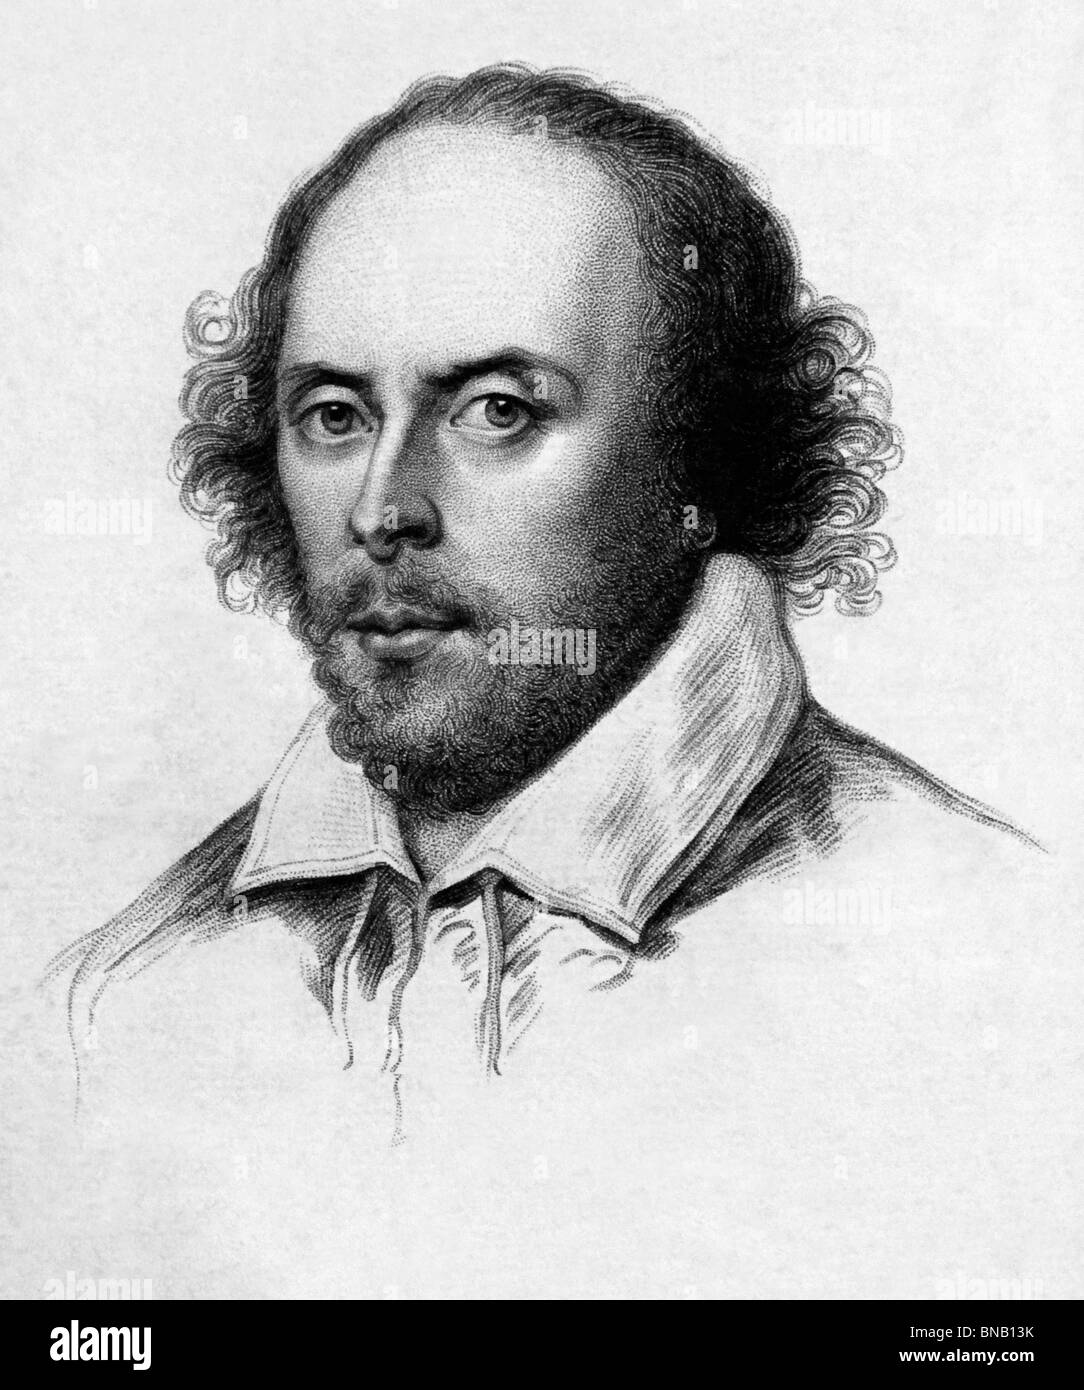 William Shakespeare Chandos portrait Stock Photo